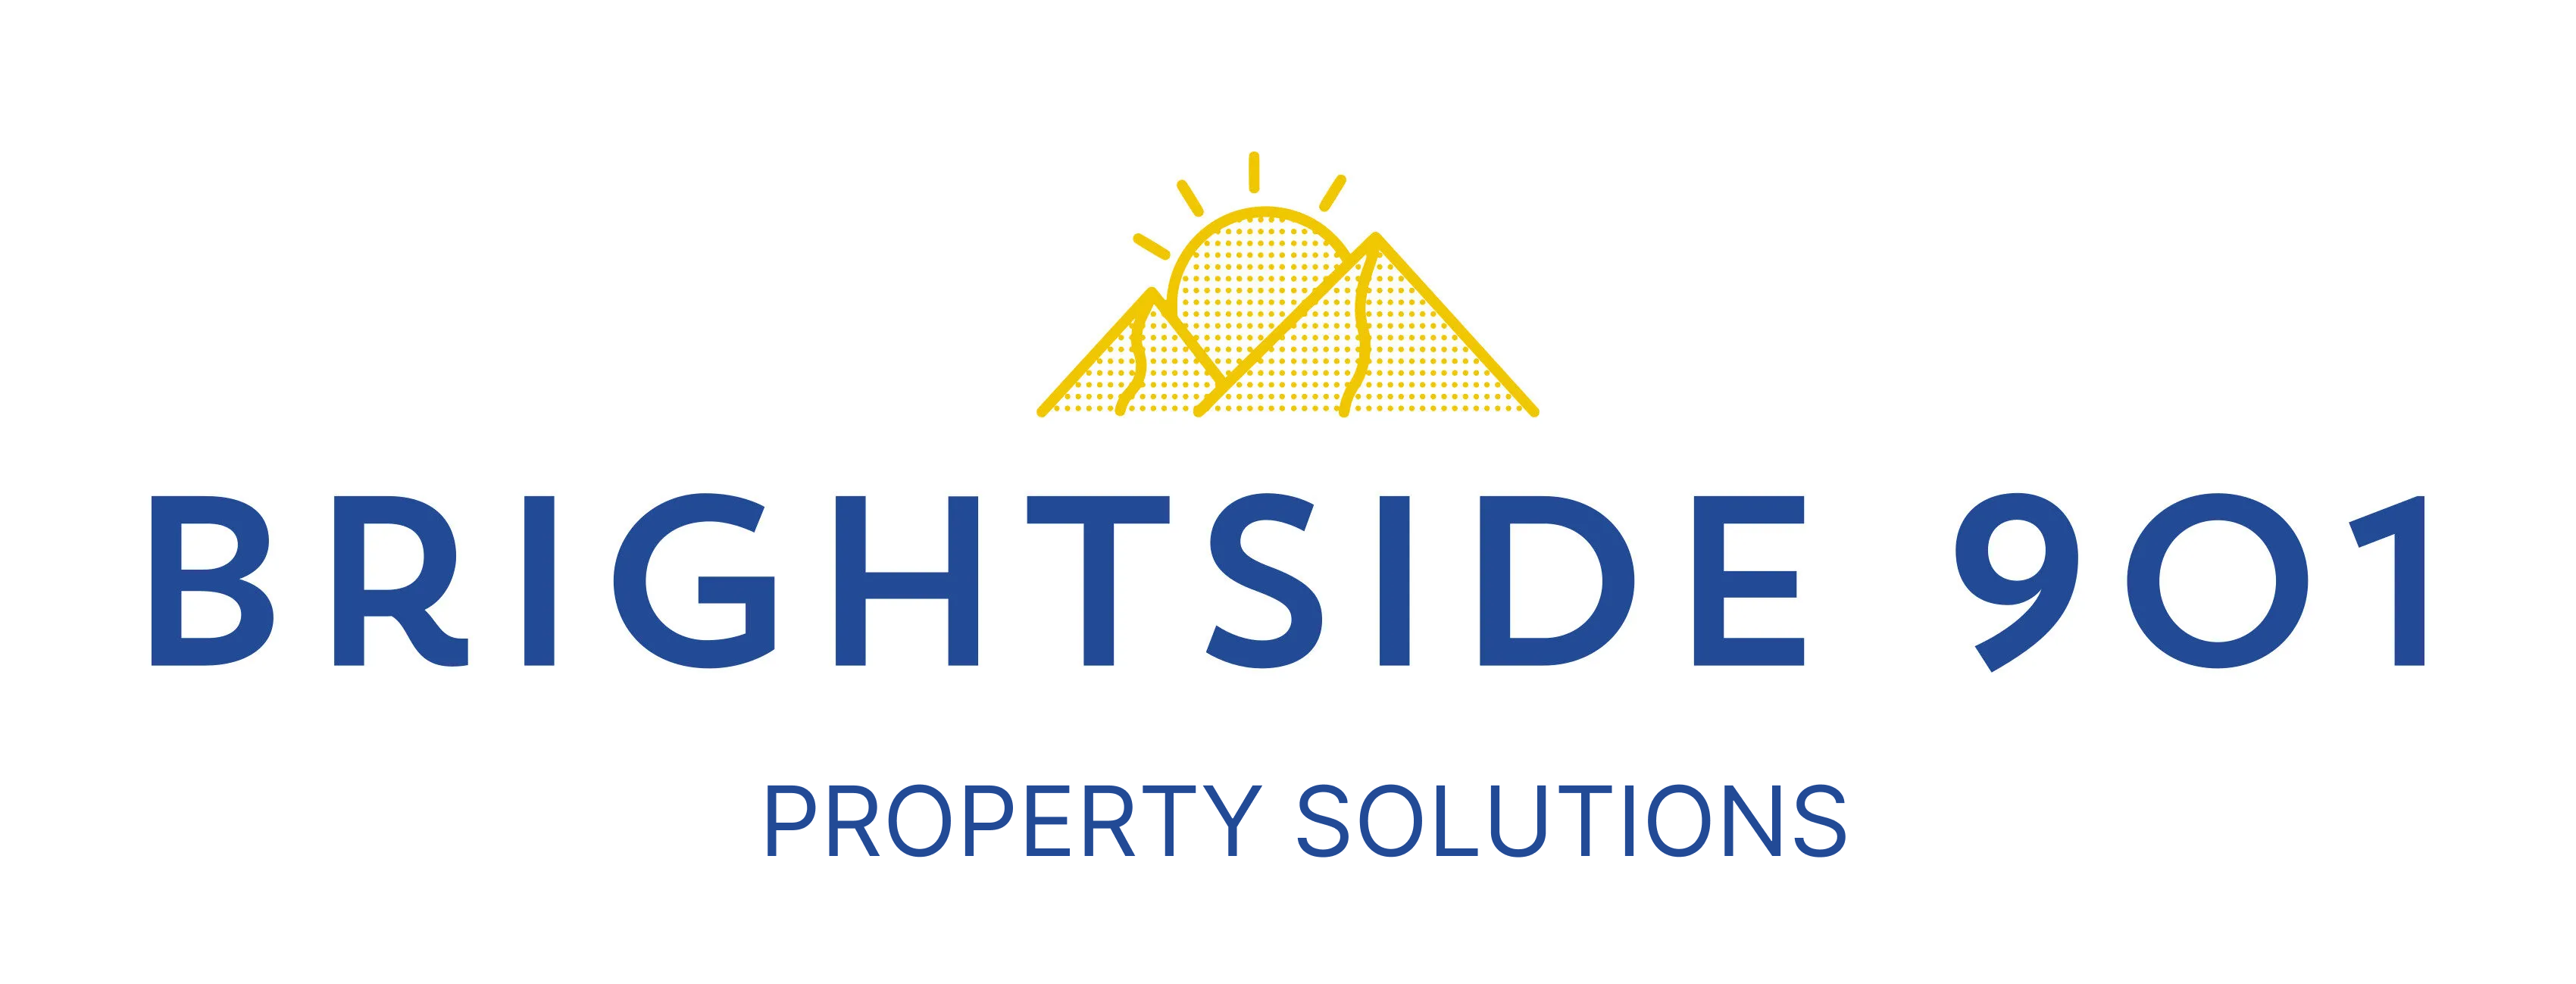 Brightside 901 logo